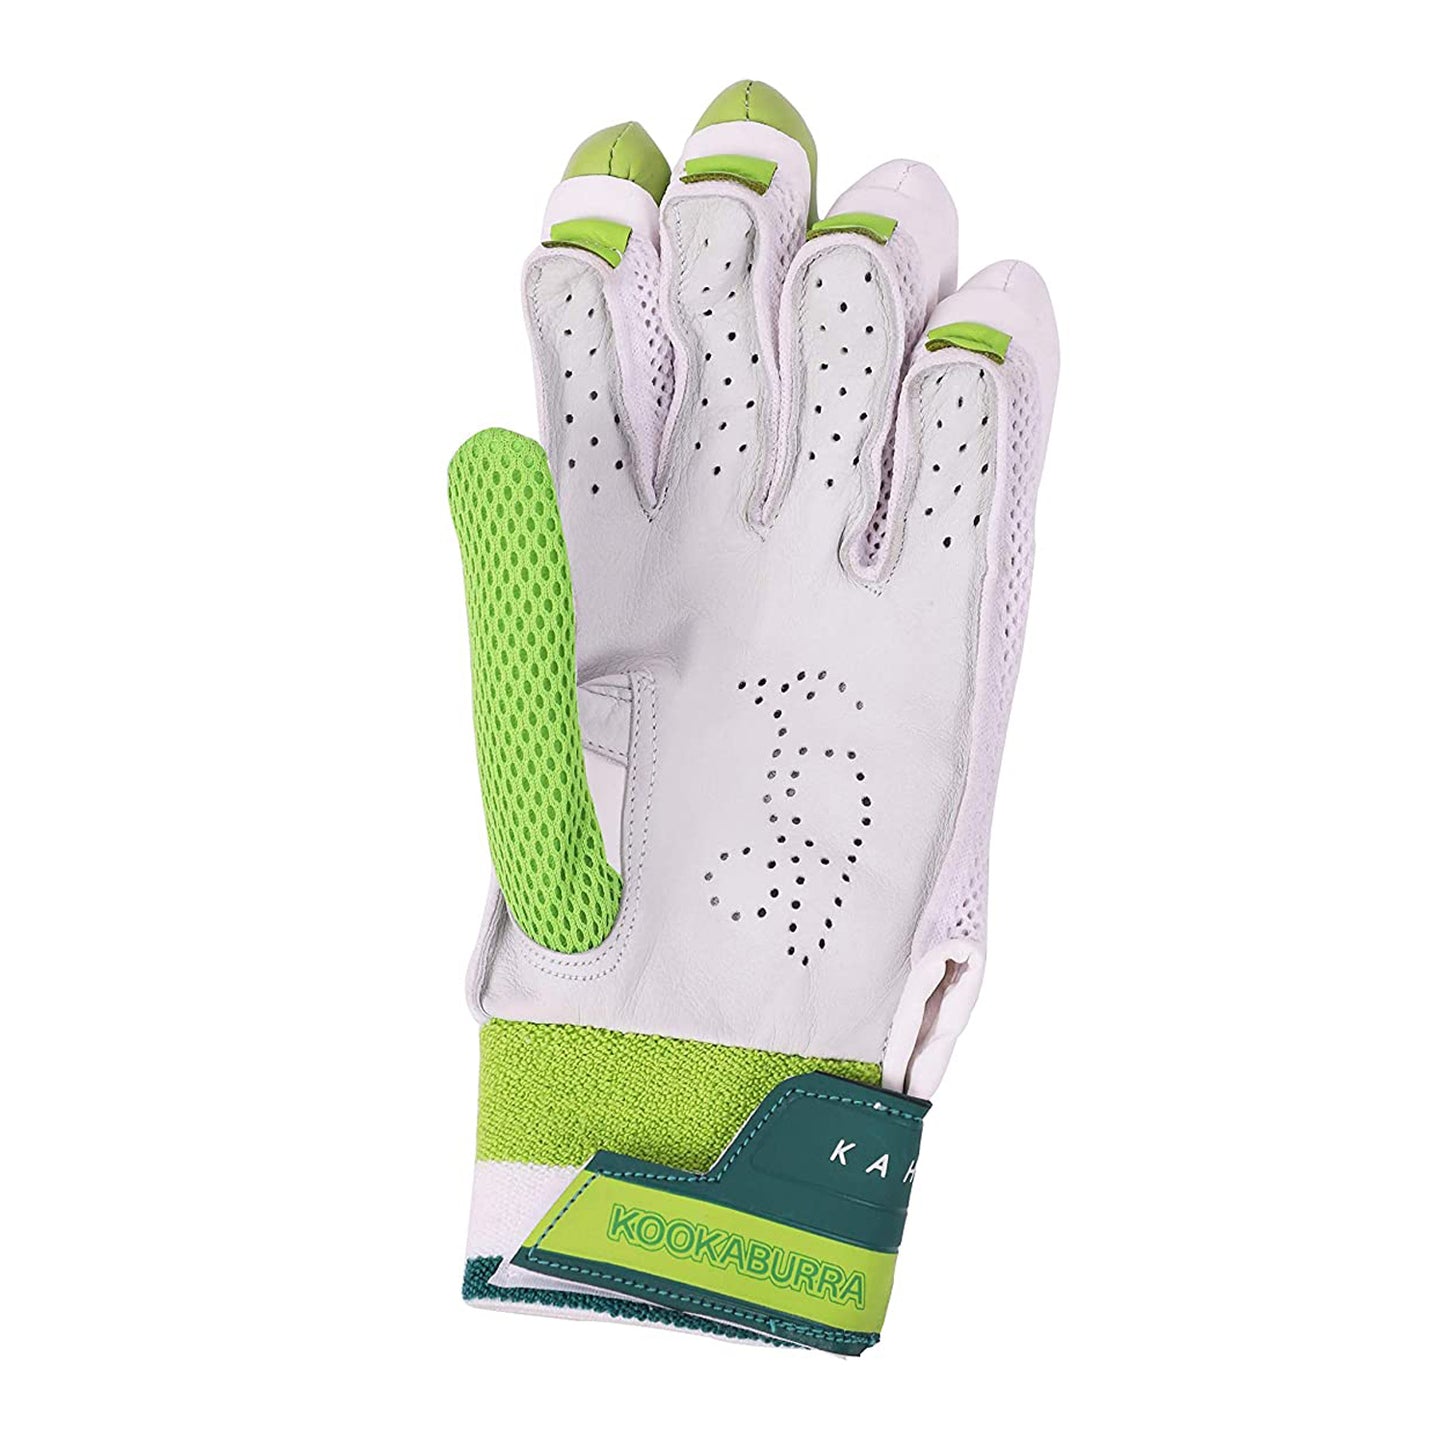 Kookaburra Kahuna 600 RH Batting Gloves - Best Price online Prokicksports.com